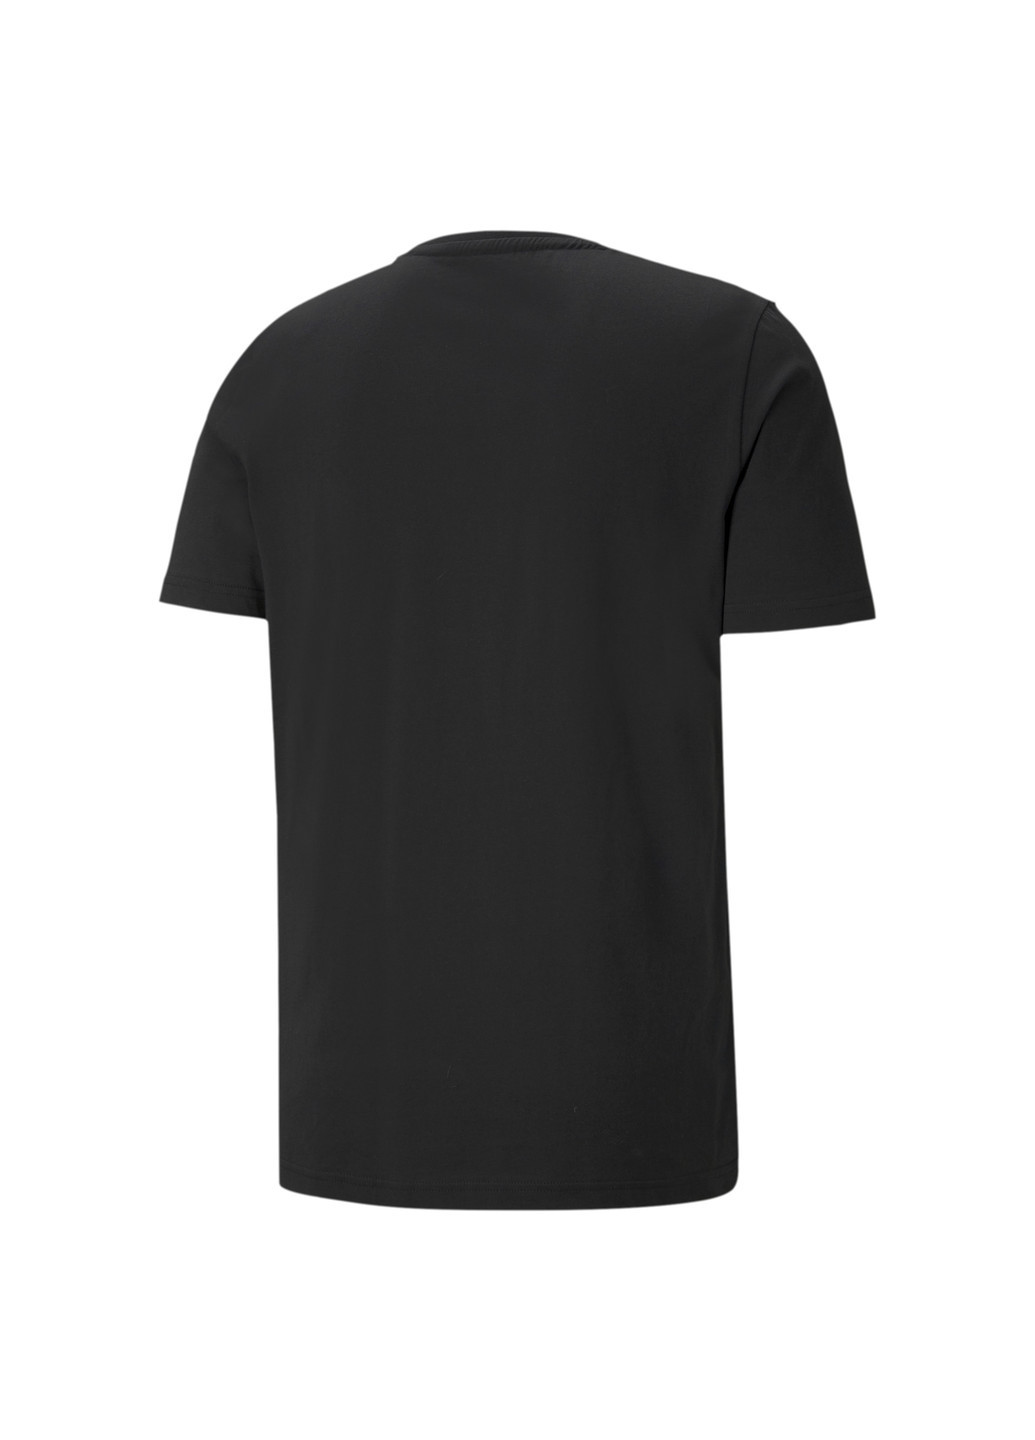 Черная демисезонная футболка mercedes f1 logo men's tee Puma